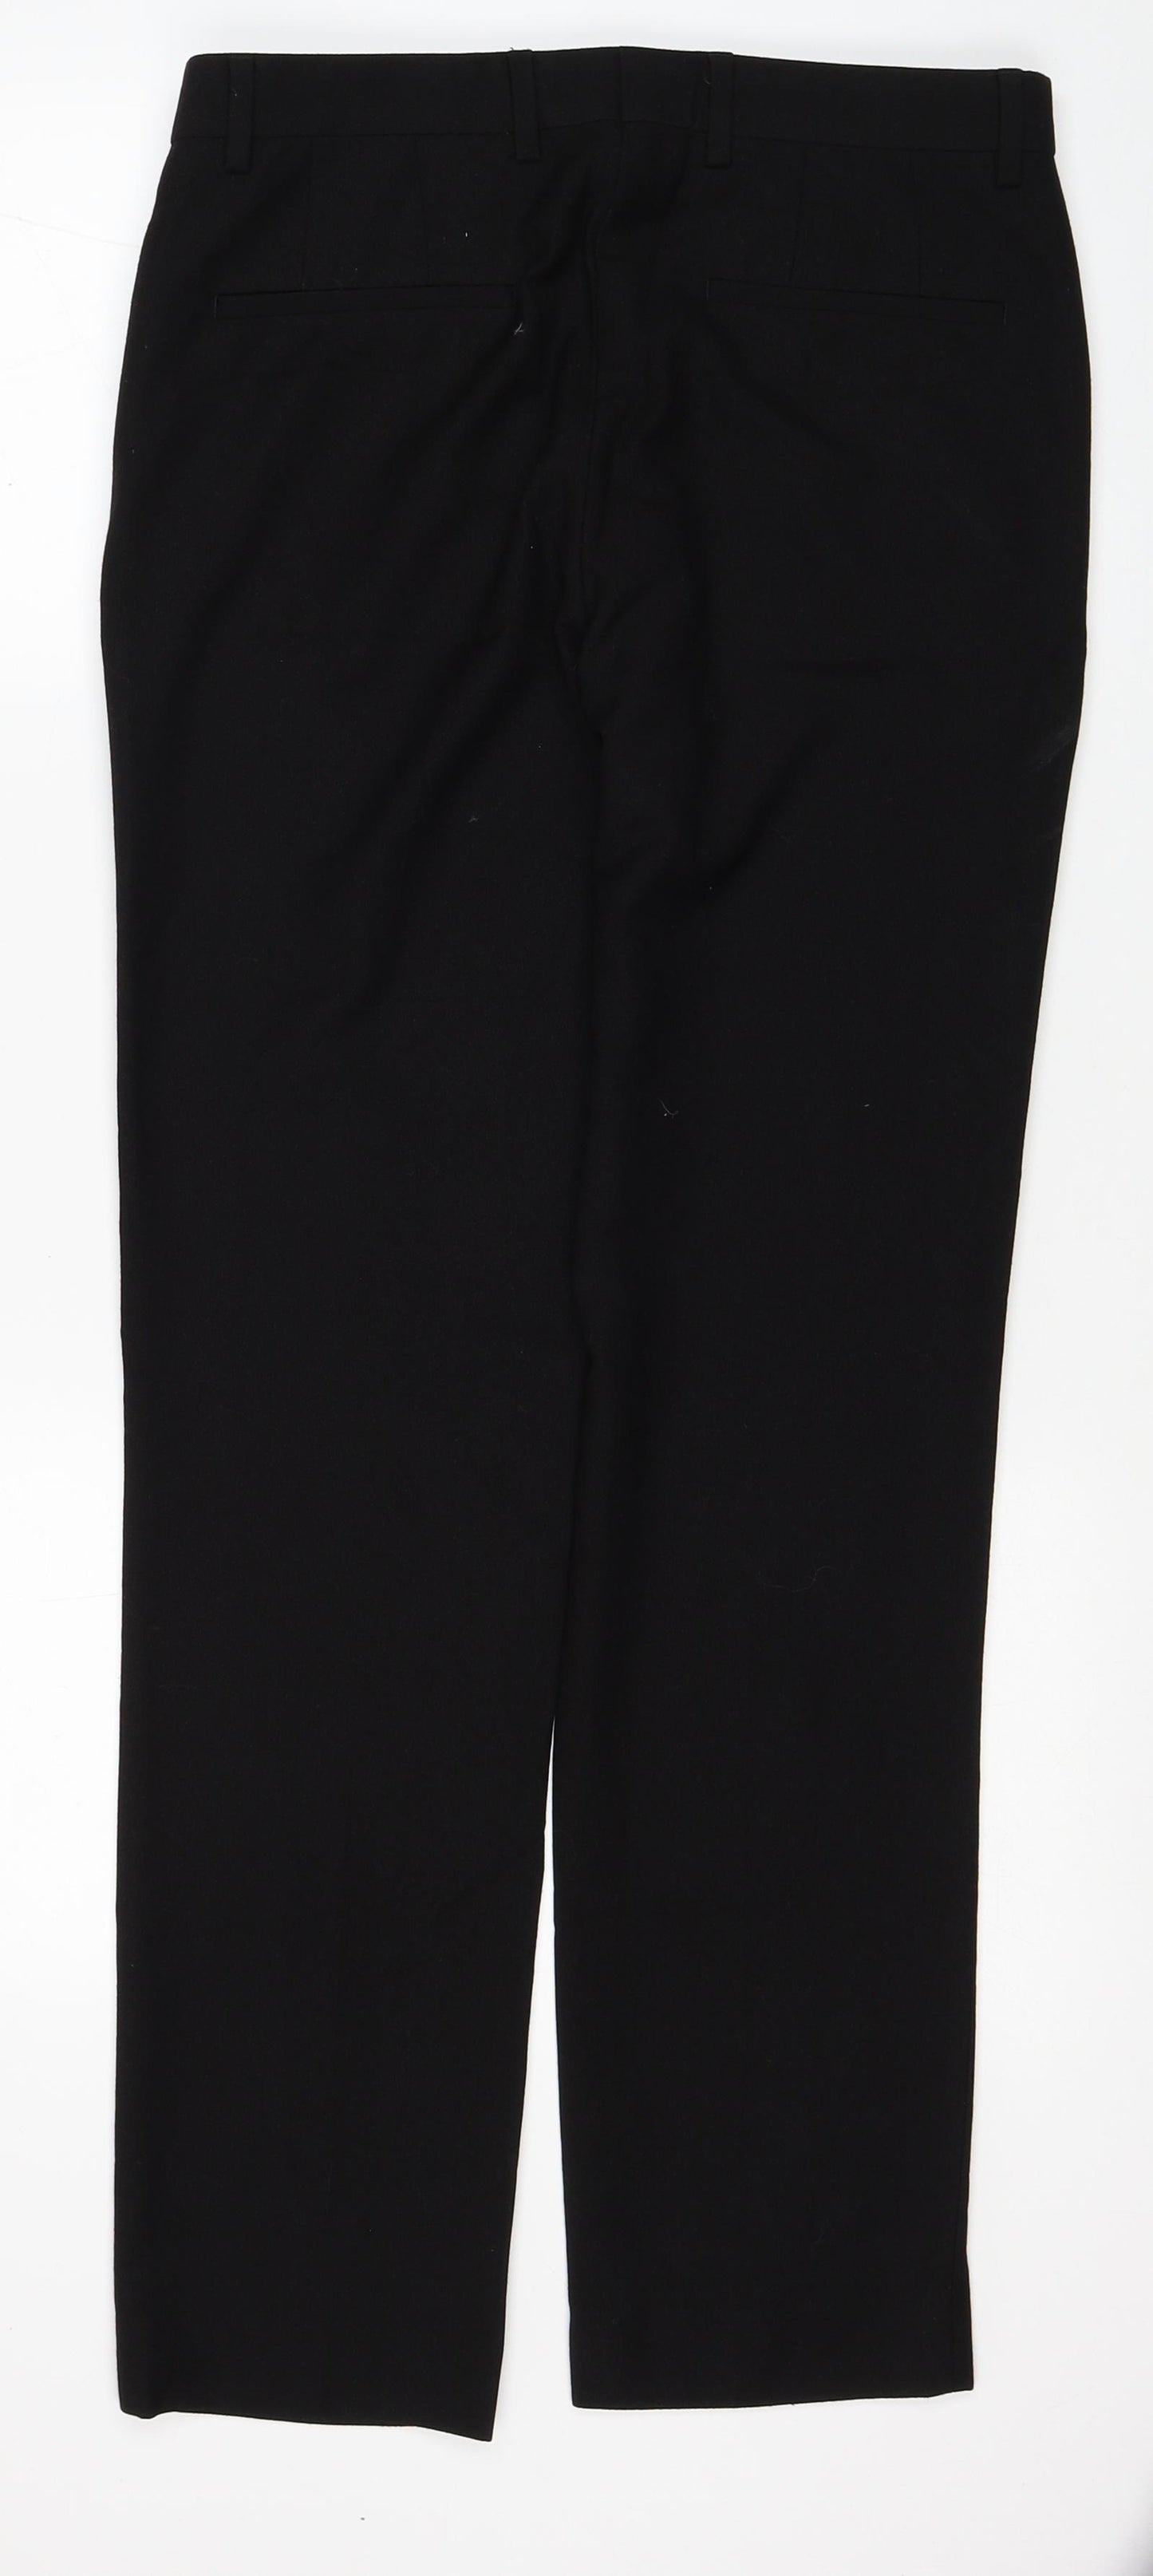 Topman Mens Black Polyester Trousers Size 30 in L30 in Regular Zip